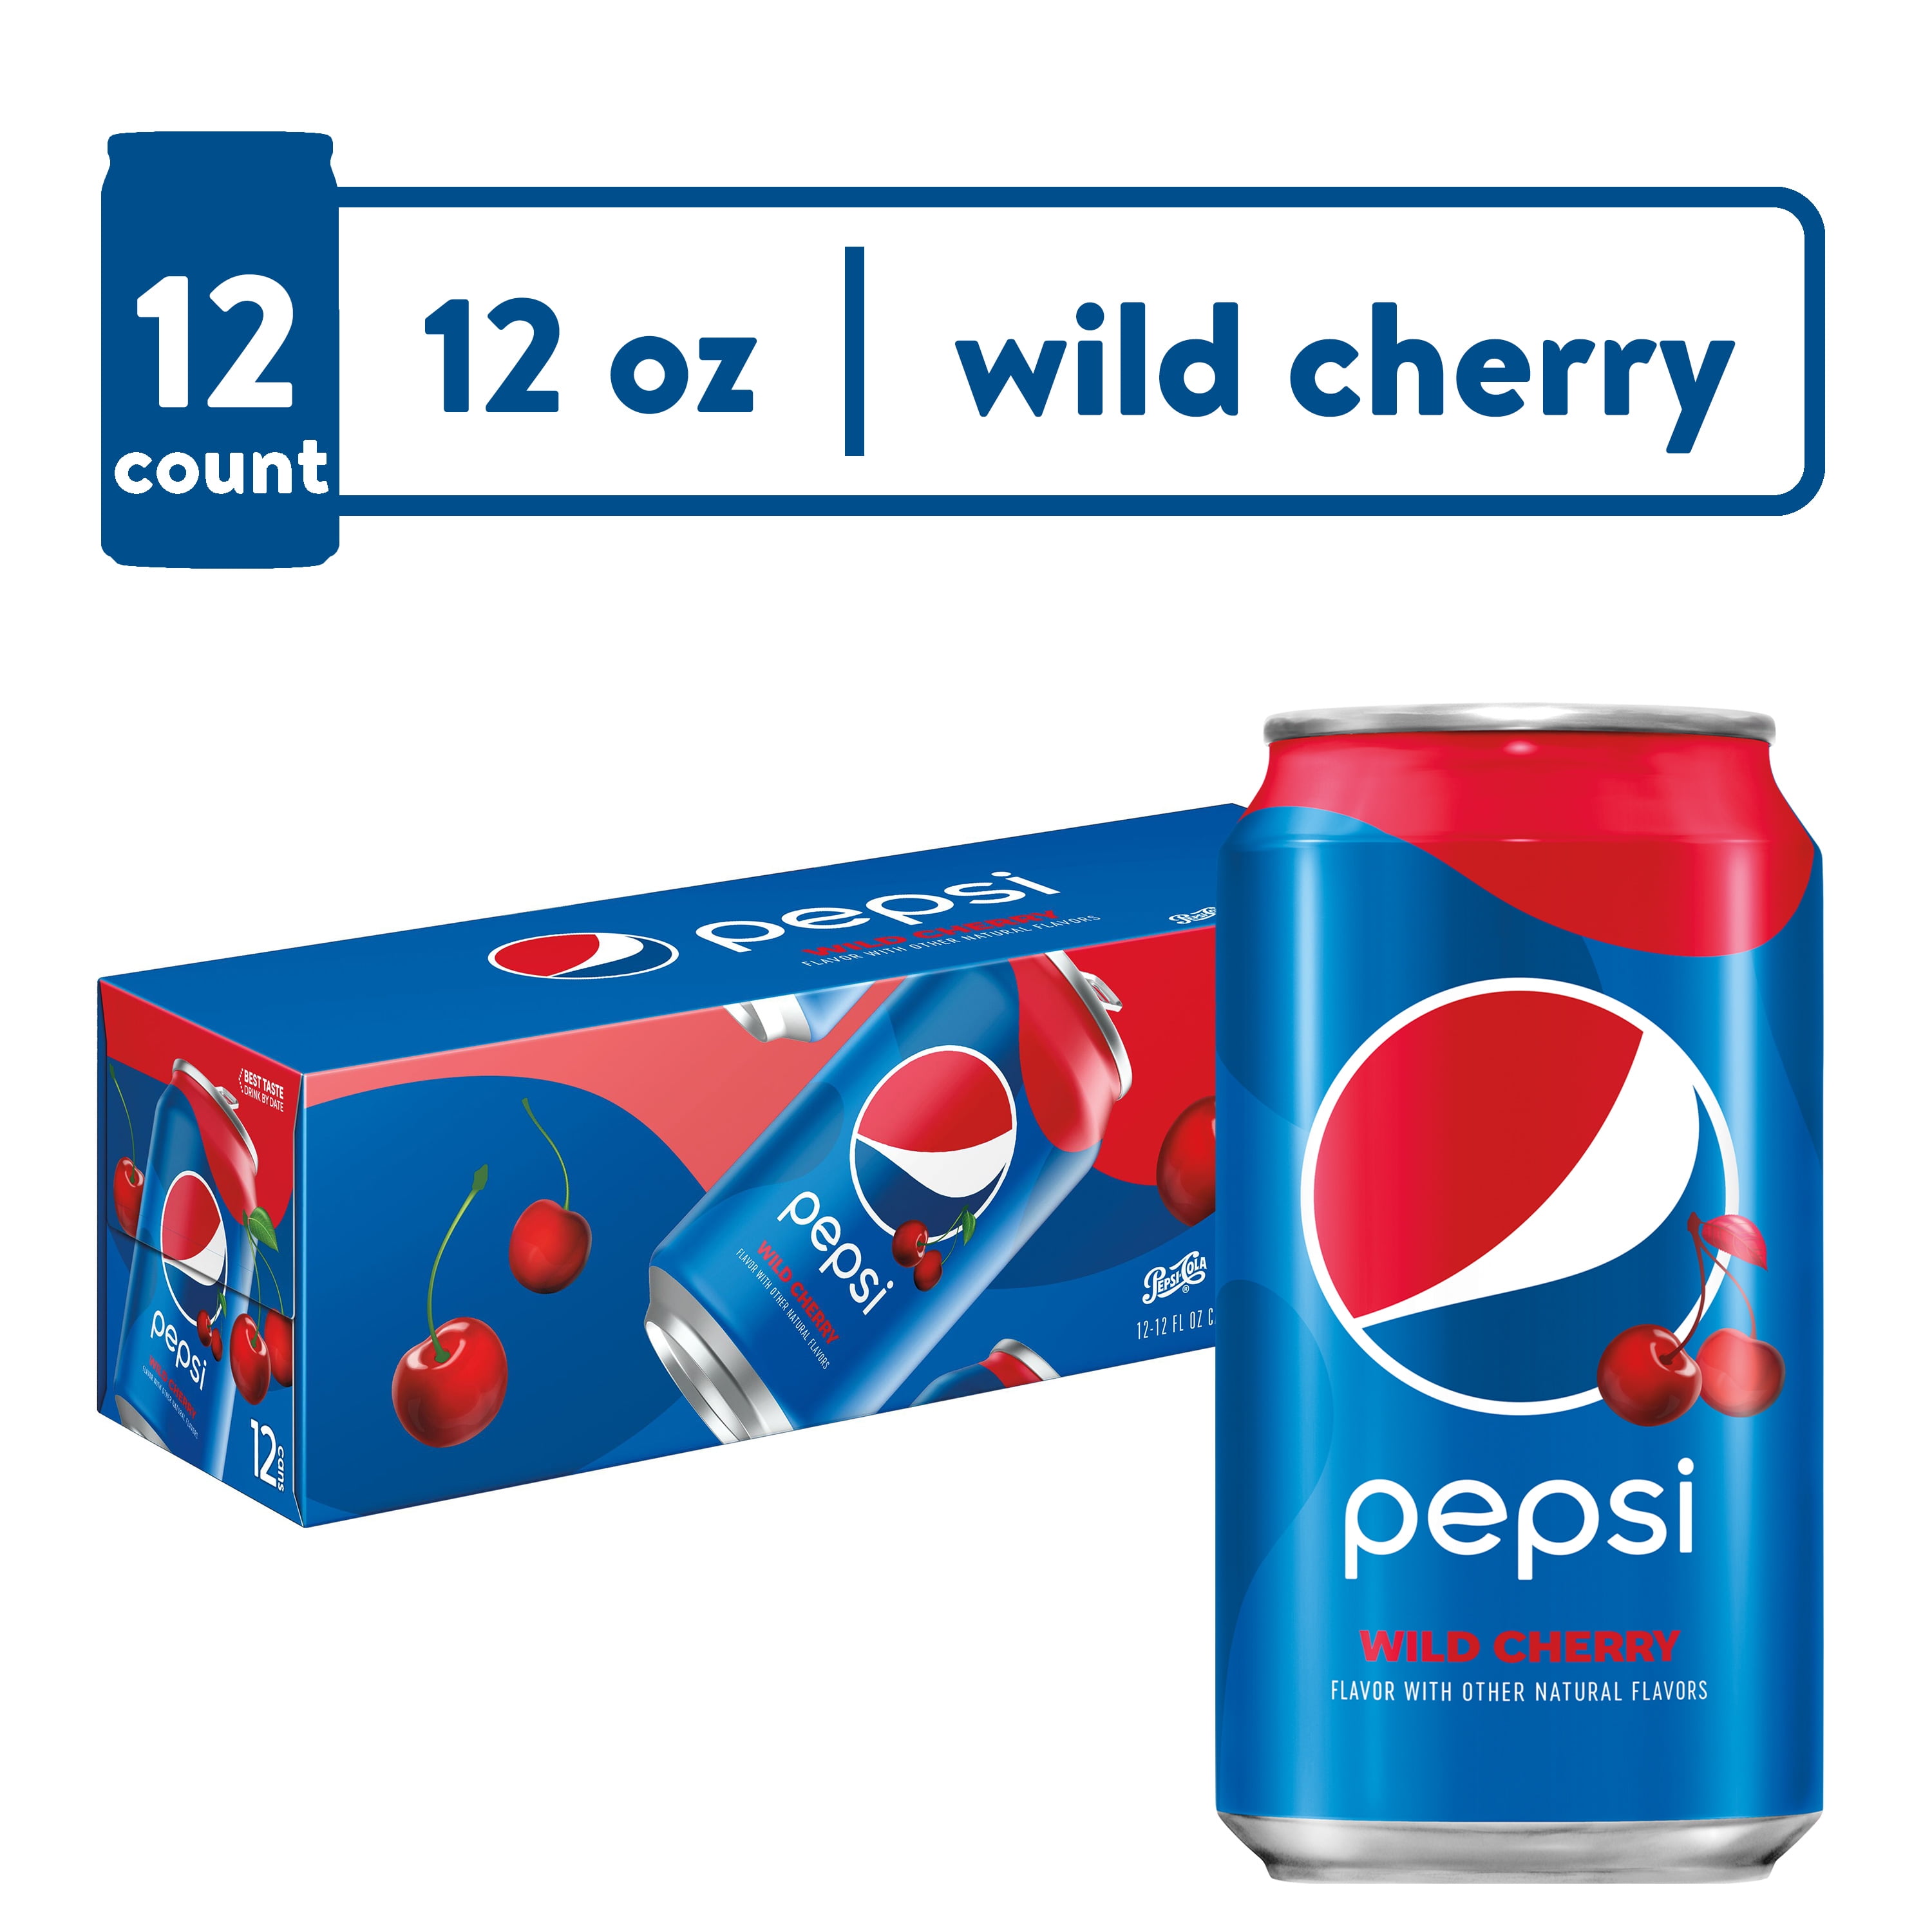 Pepsi Wild Cherry Soda Pop, 12 fl oz, 12 Pack Cans - Walmart.com